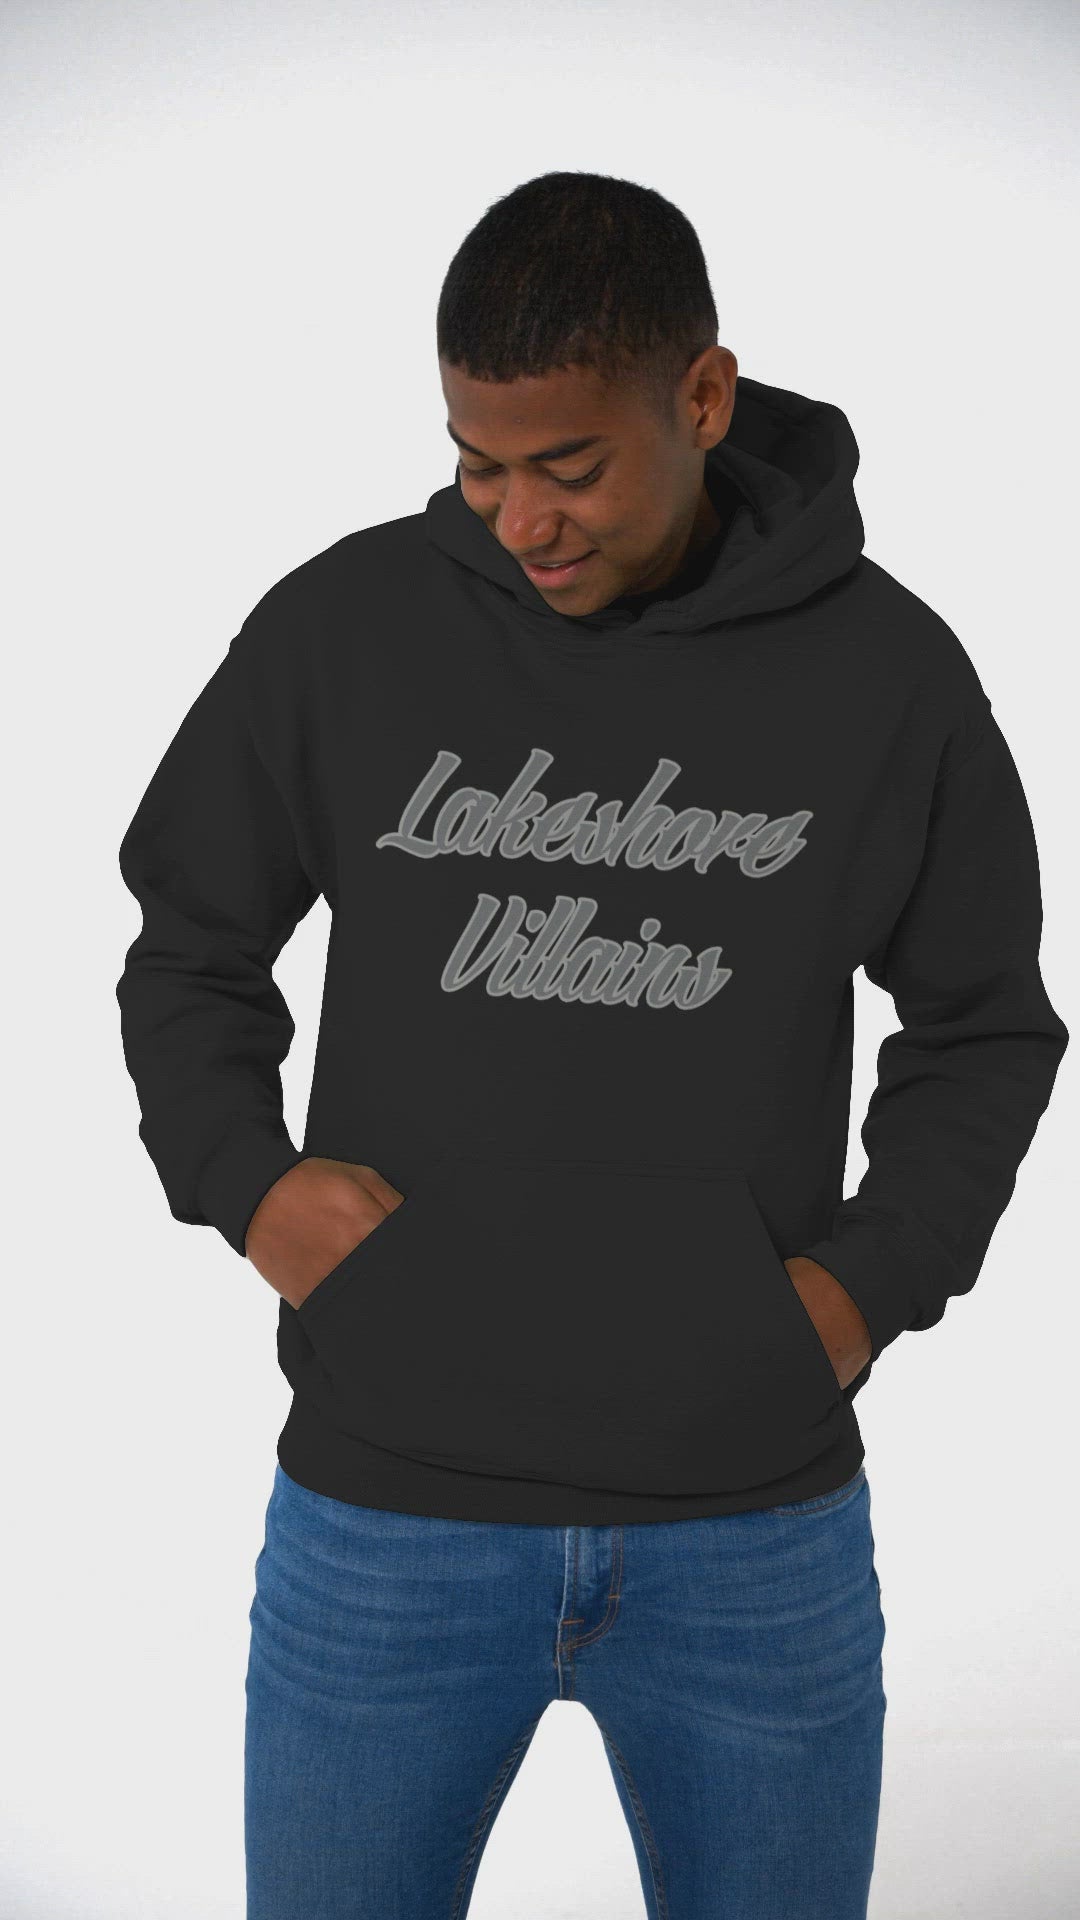 Lakeshore Villains Monochrome Edition Unisex Hoodie